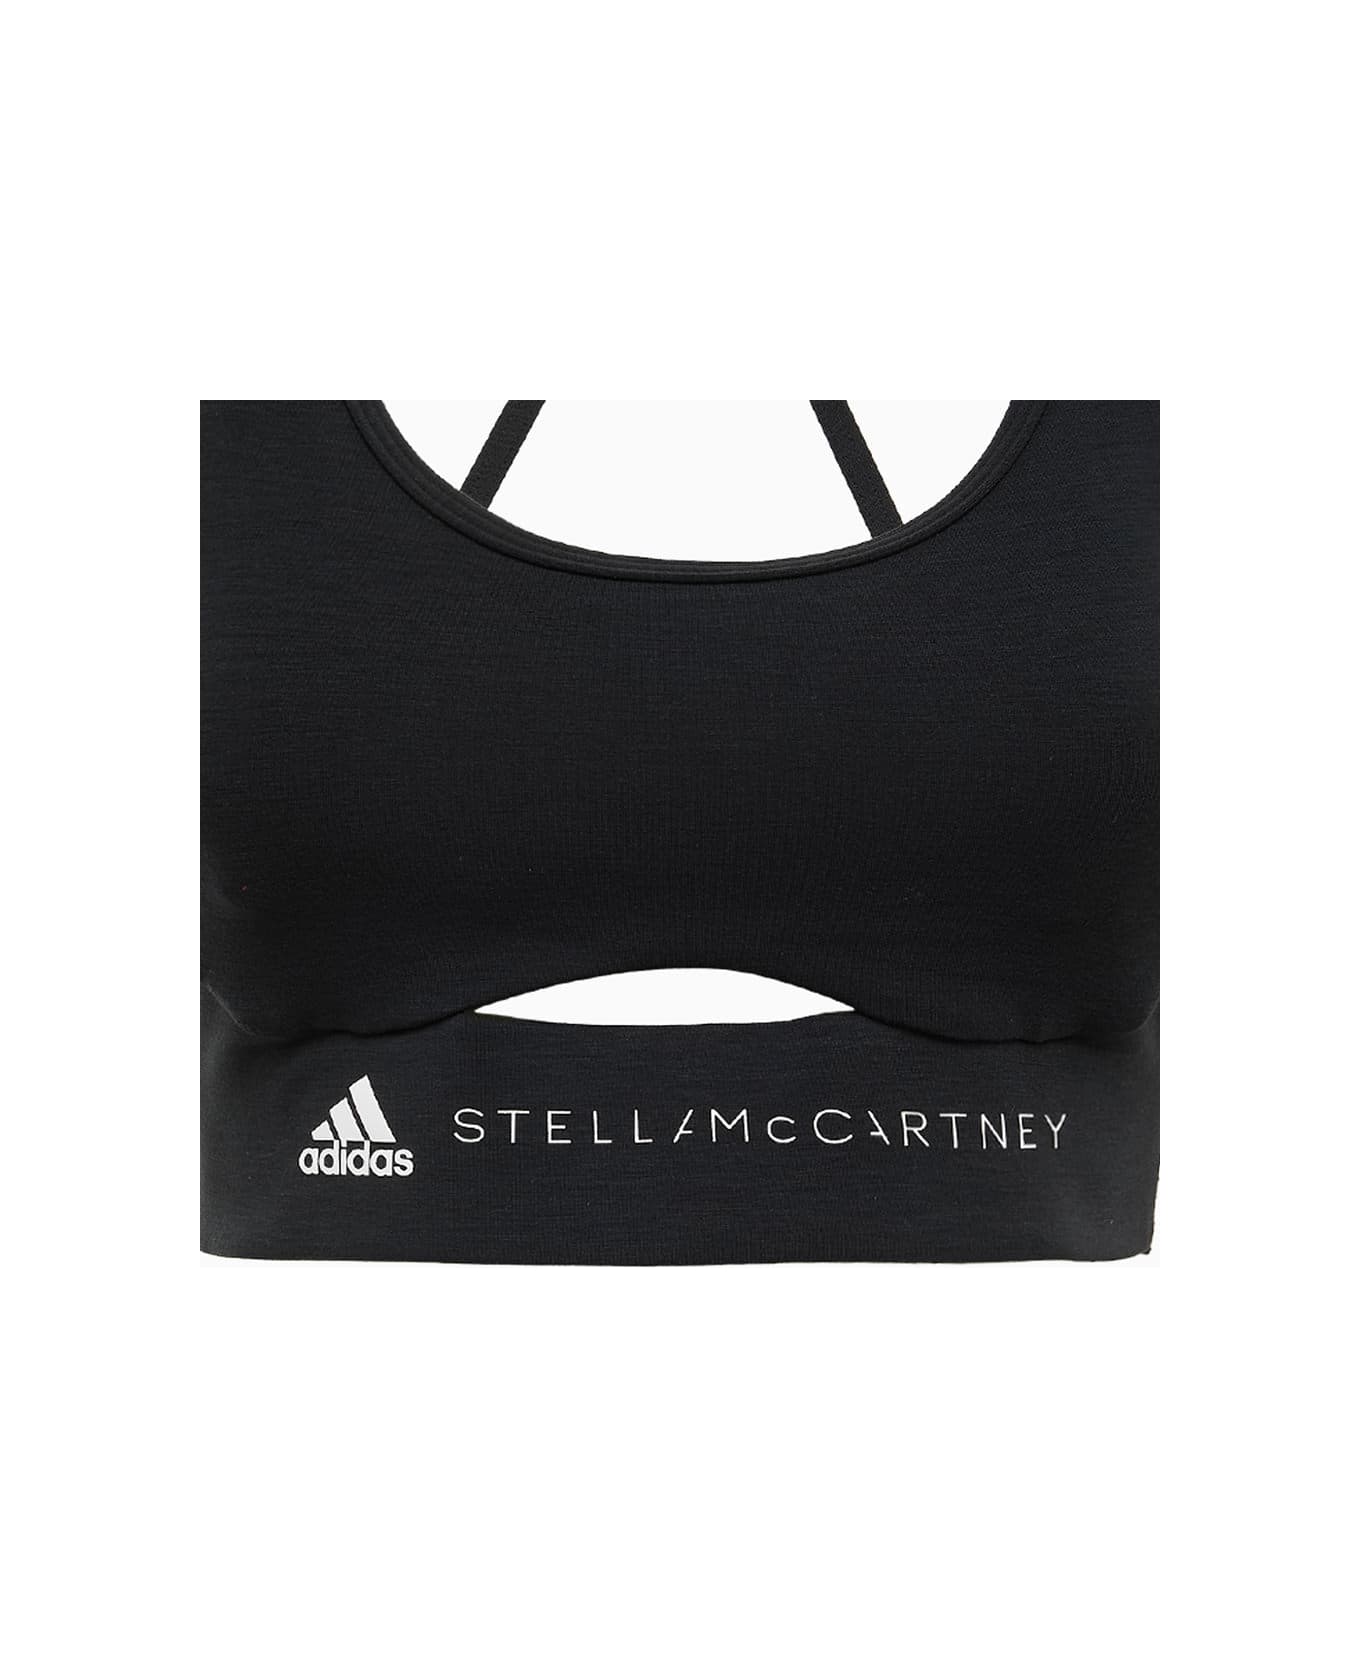 Adidas by Stella McCartney Top Hr2192 - Black トップス